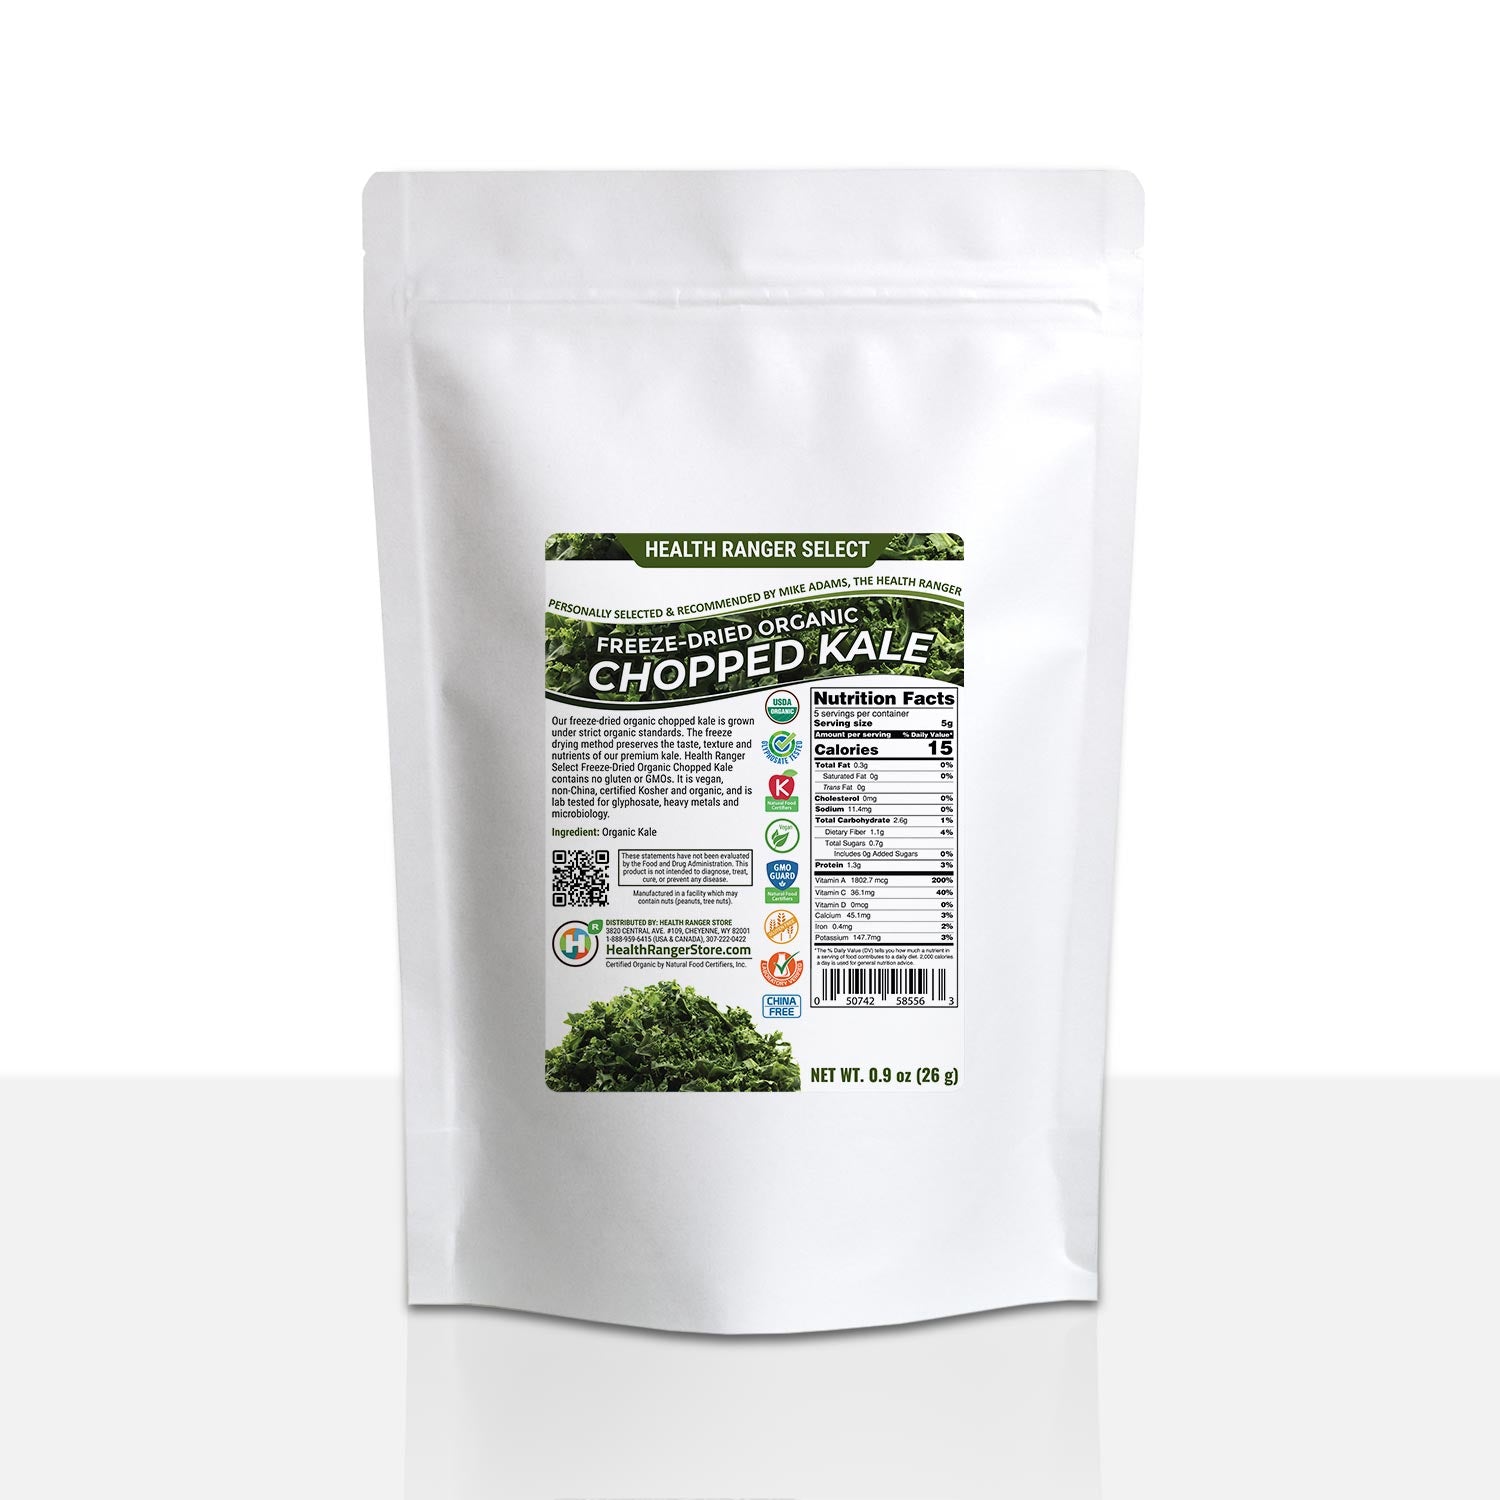 Freeze-Dried Organic Chopped Kale 0.9 oz (26g) (3-Pack)